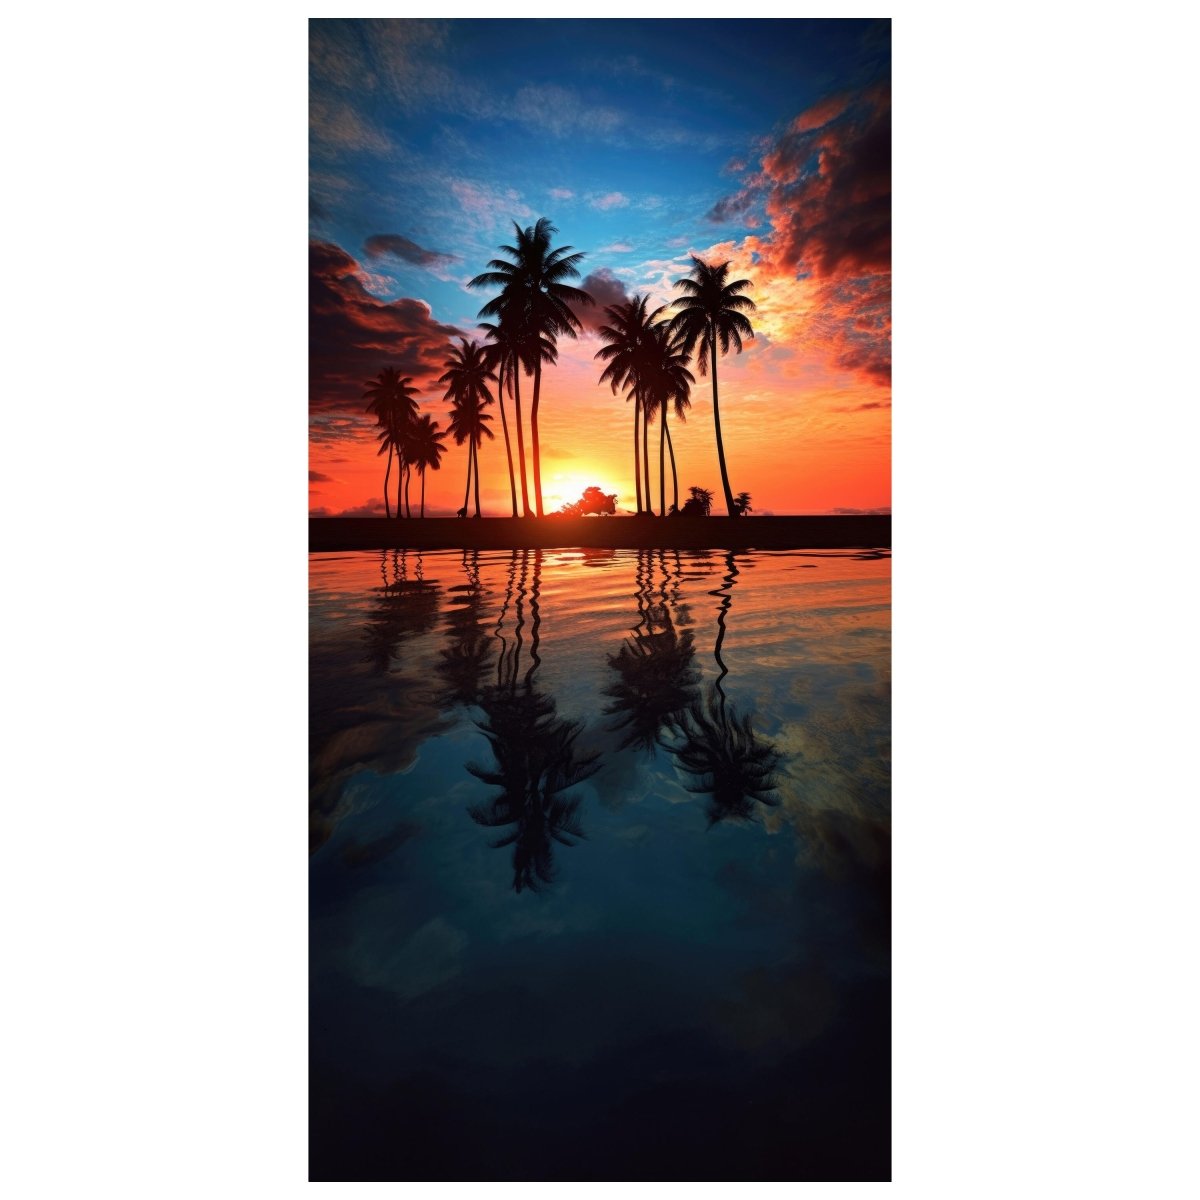 Türtapete Palmen, Strand, Sonnenaufgang M1491 - Bild 2